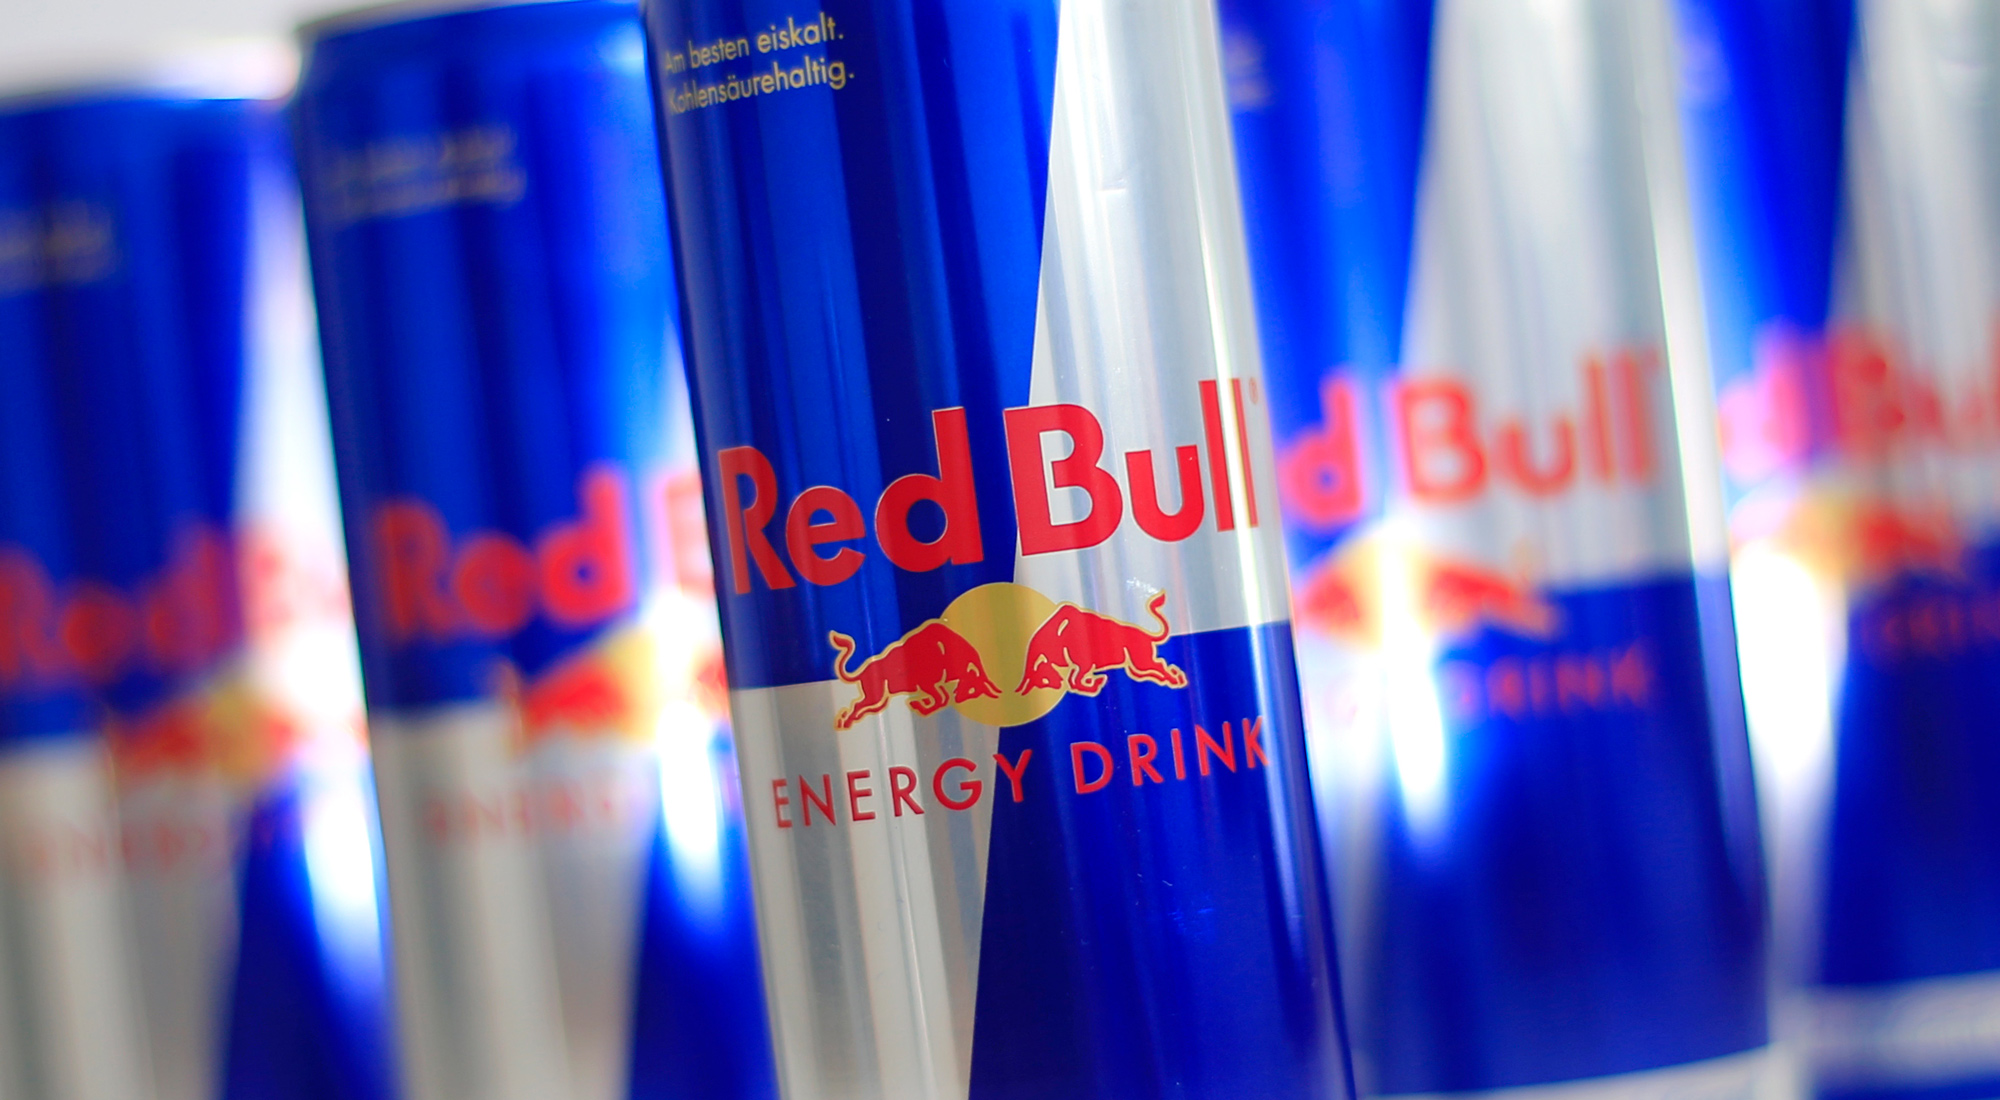 Red Bull Flies Past - Billion Growth Mark €10 Sales Bloomberg Despite Slower